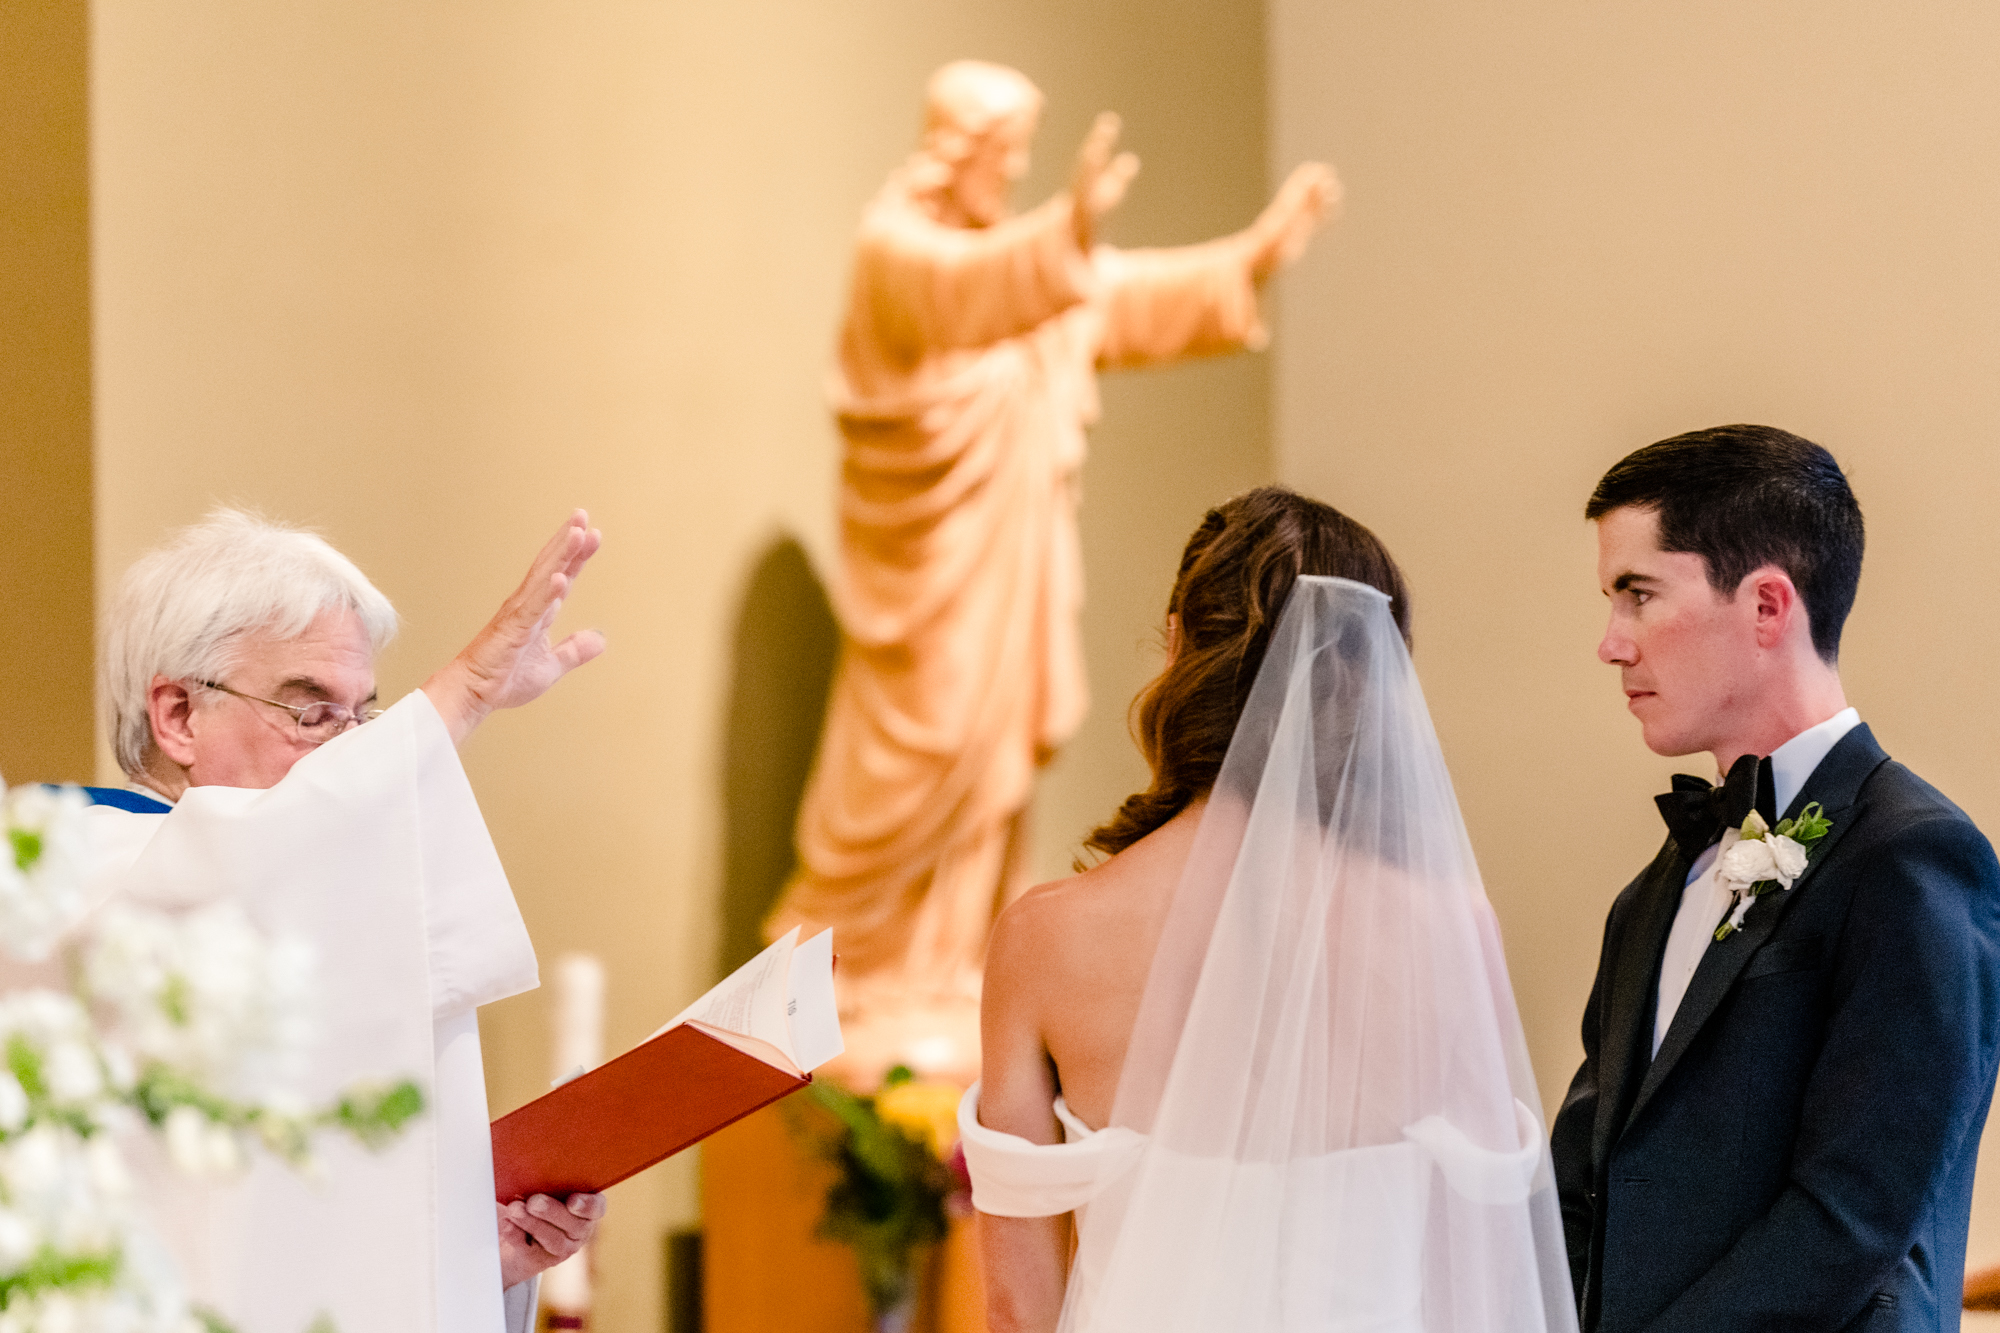 Wedding at Sacred Heart Church Seattle: Wedding at Sacred Heart Church Seattle: Priest blesses bride and groom